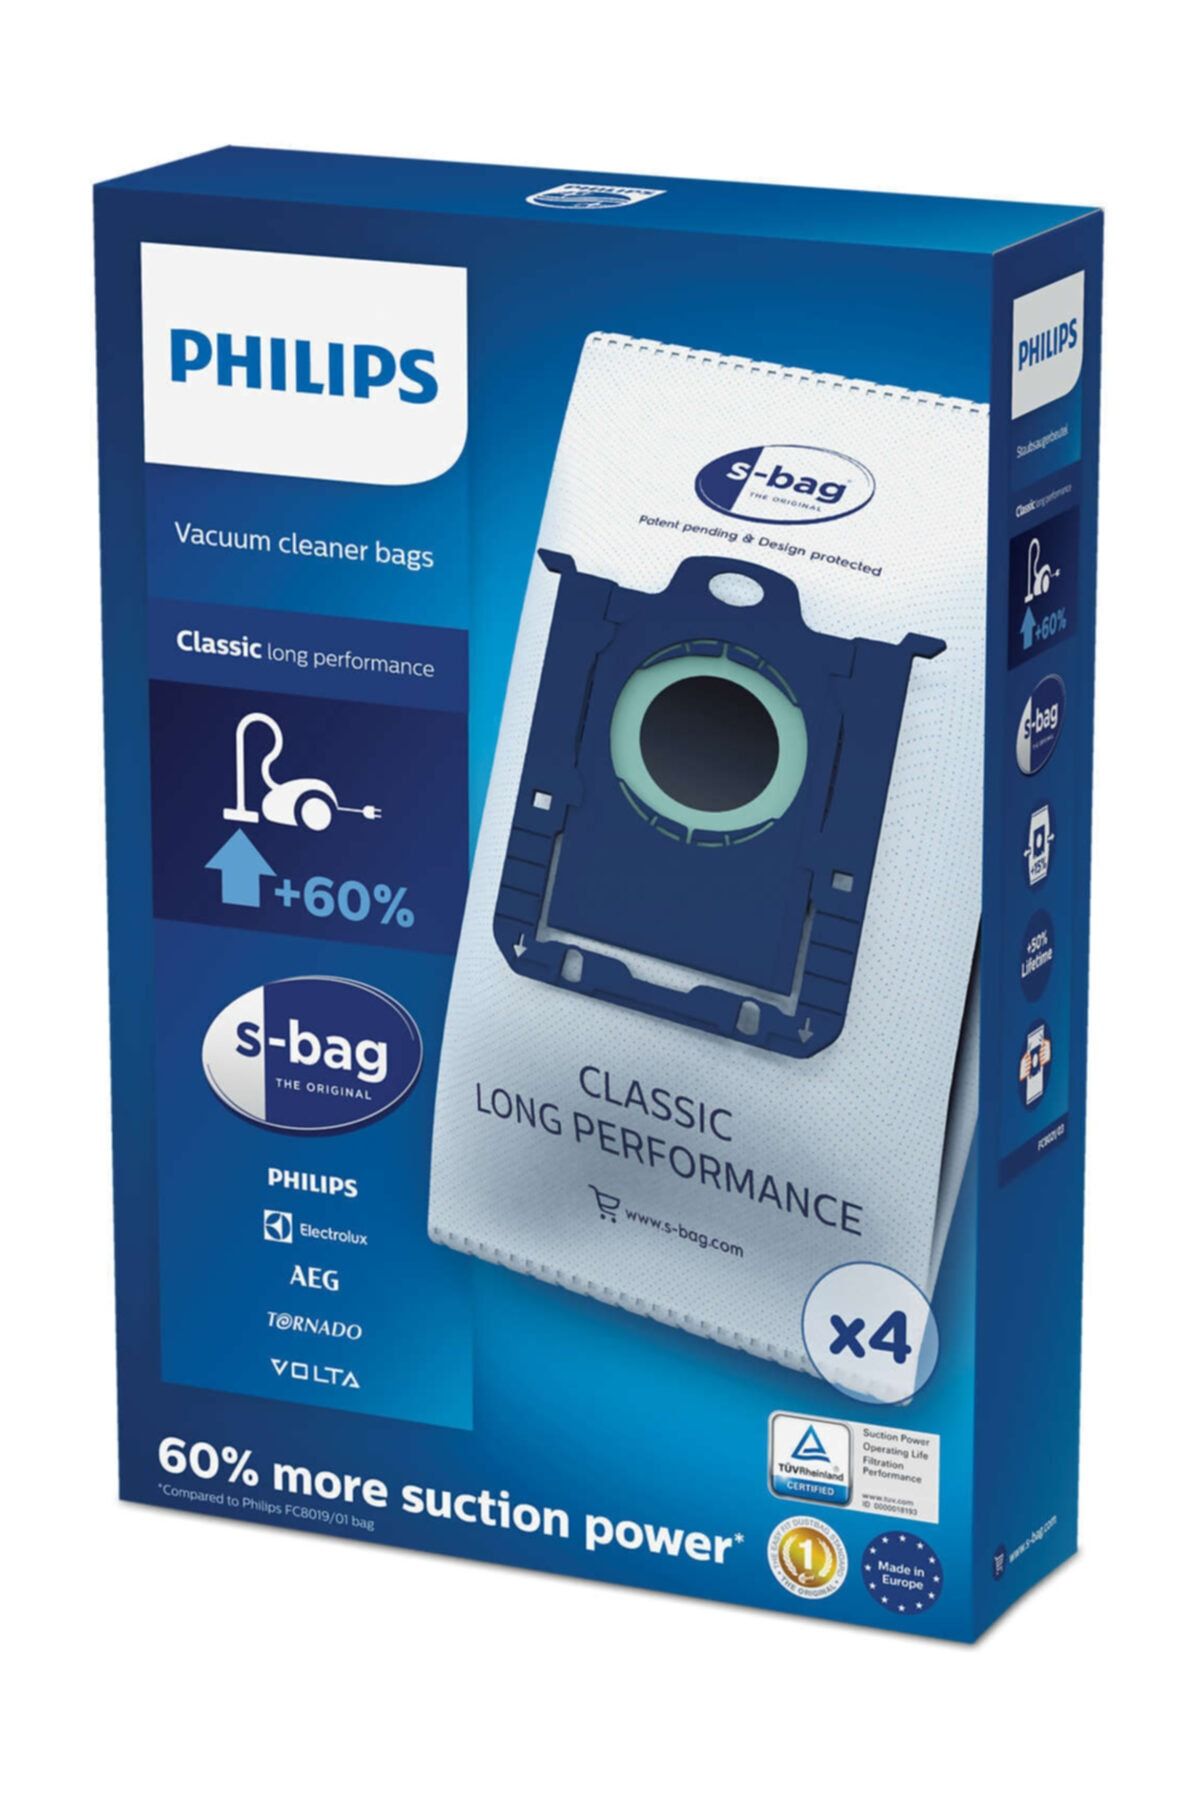 Philips Fc 8021/03 S-bag Toz Torbası